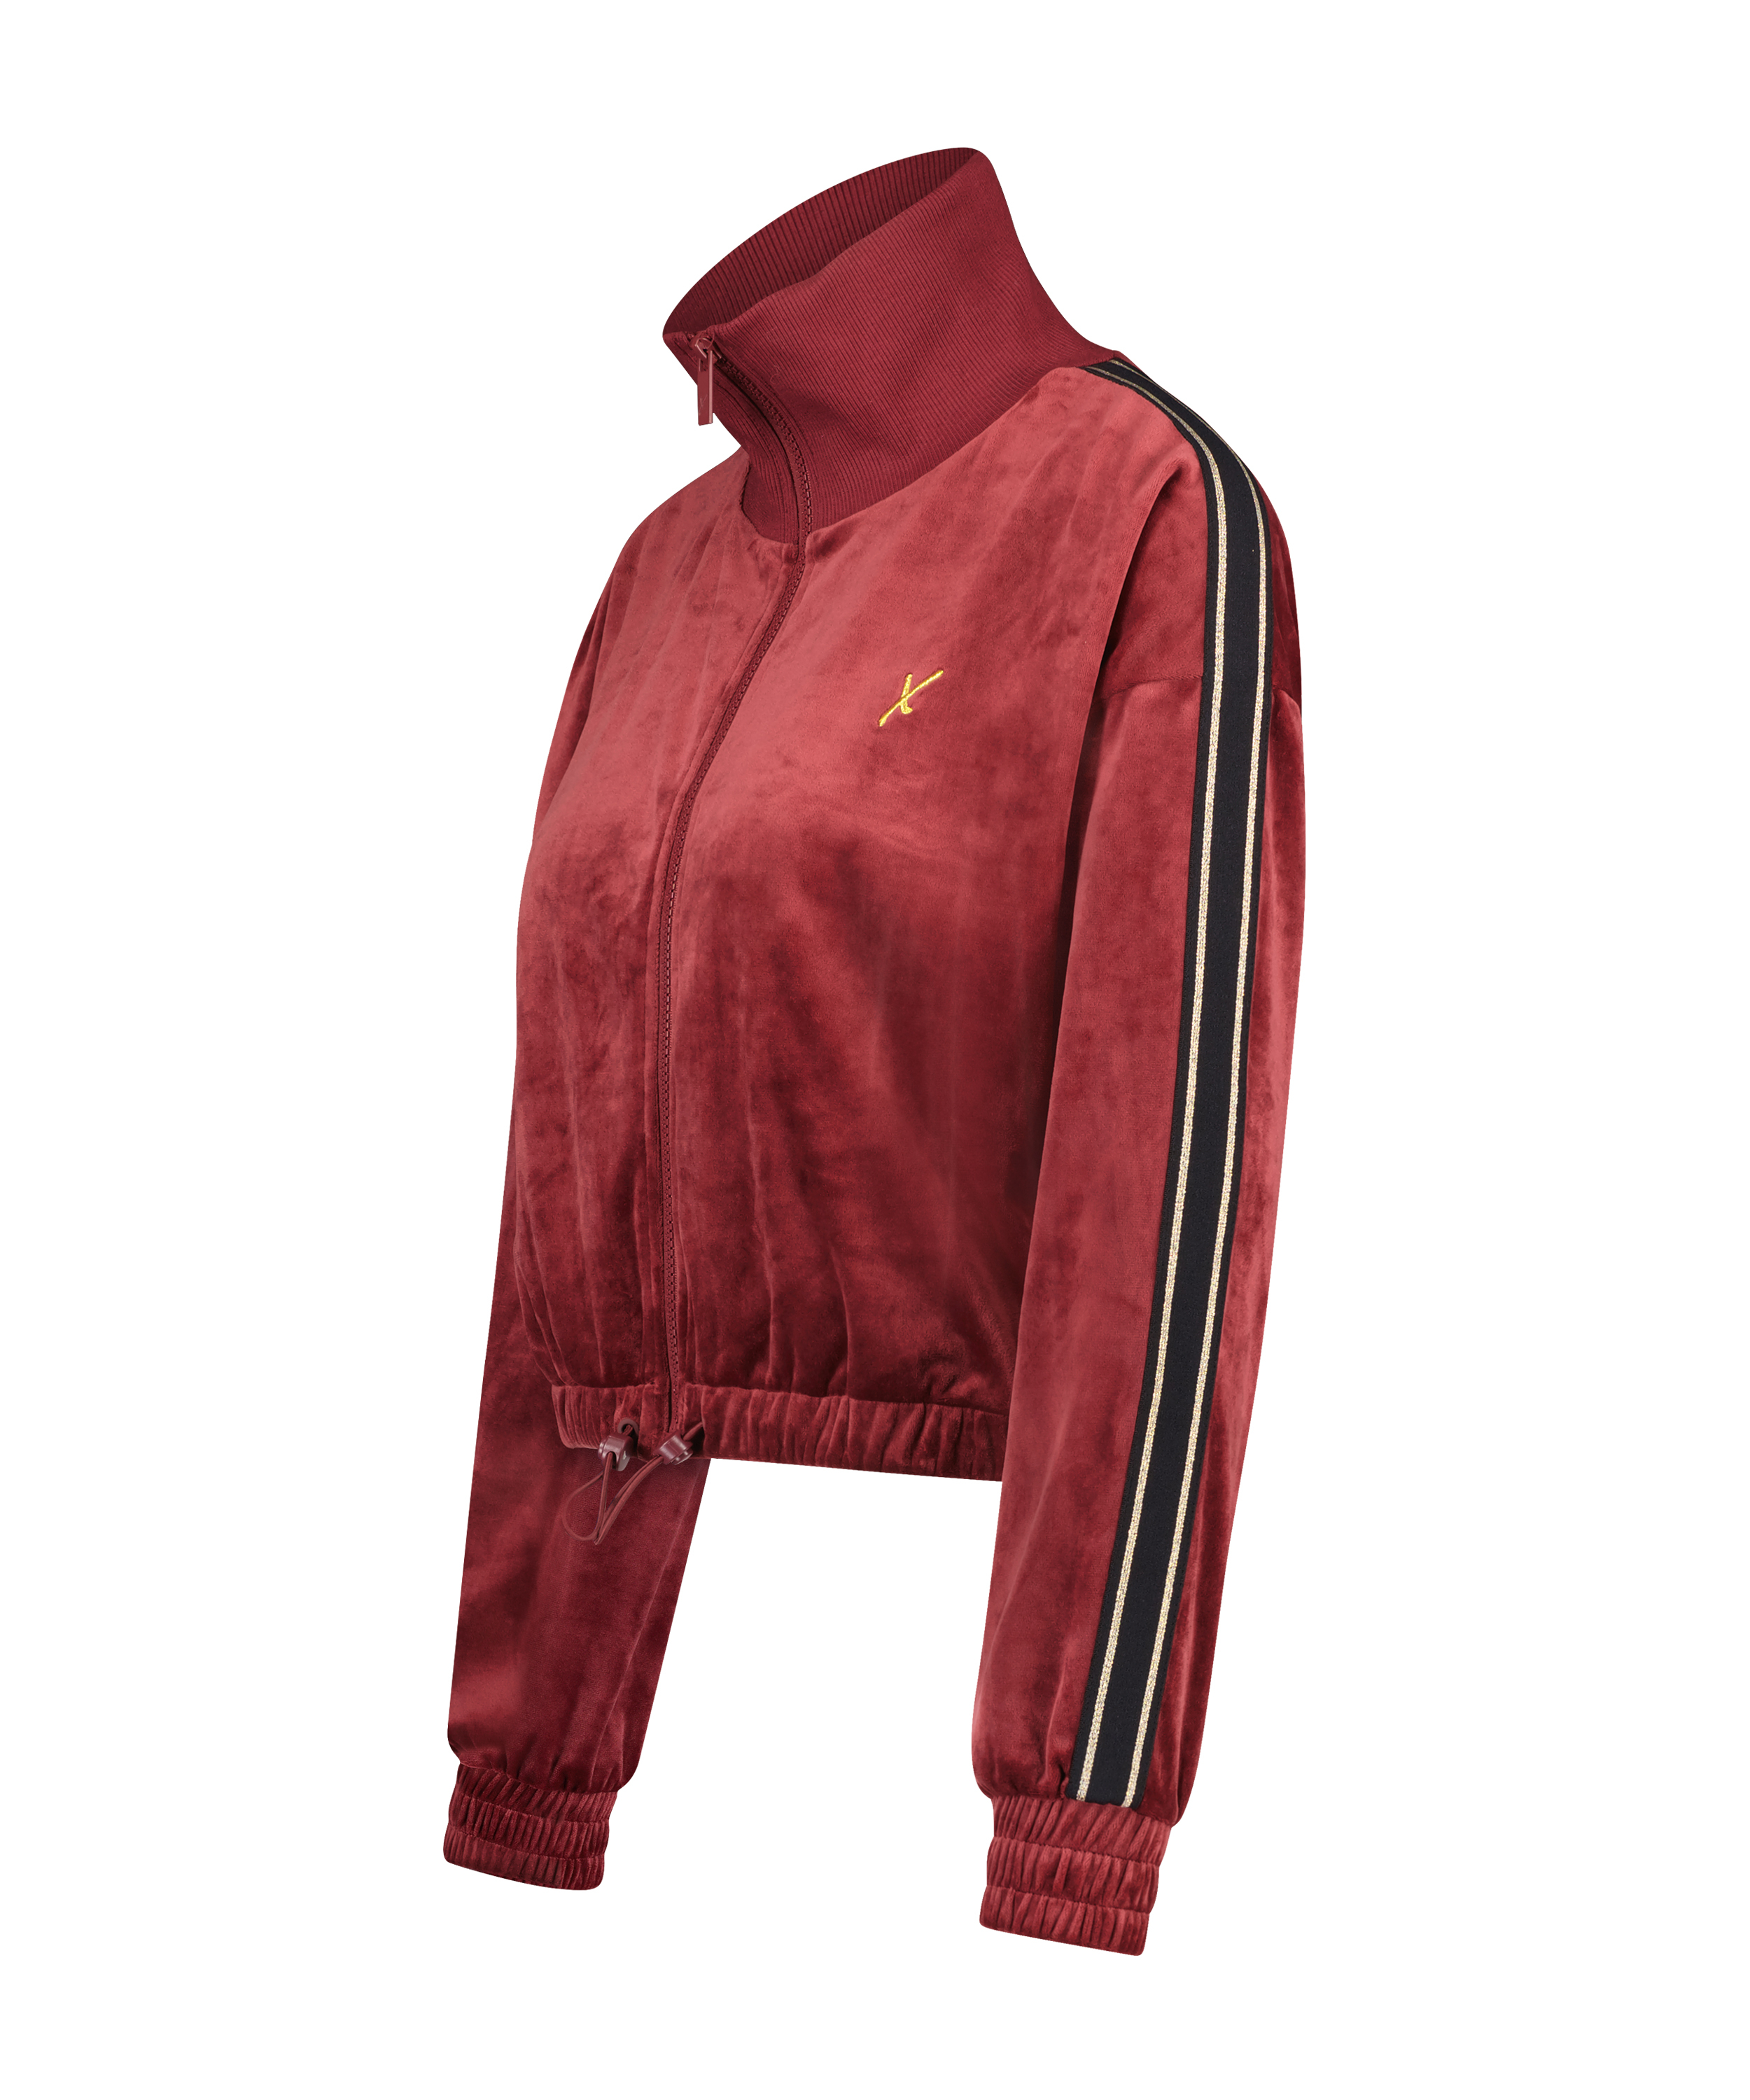 HKMX Sport jacket Velours, Red, main